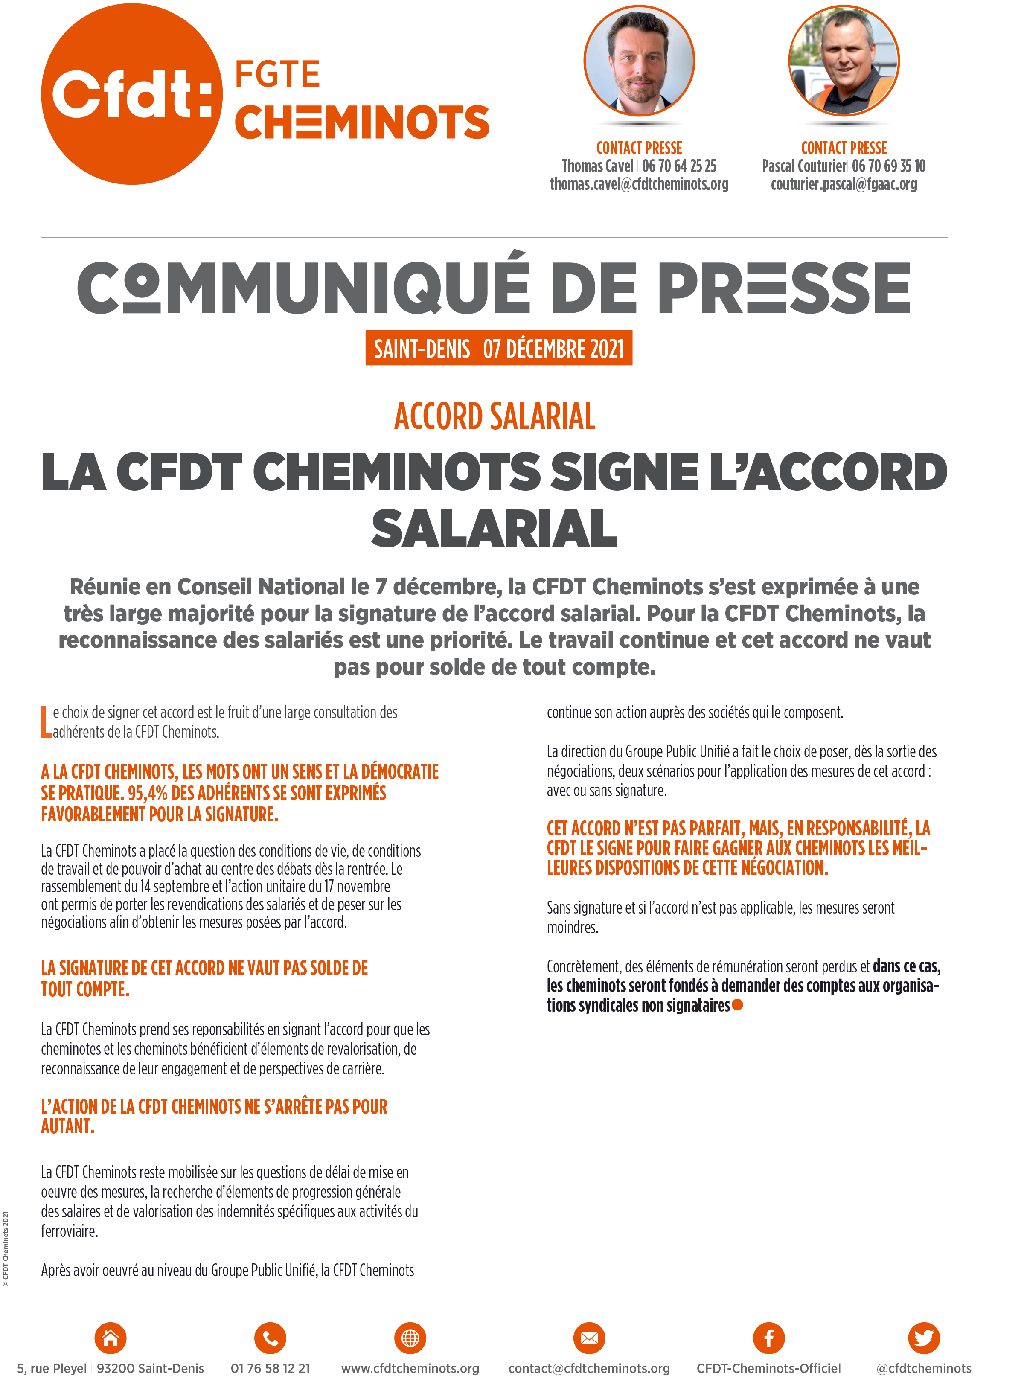 La CFDT Cheminots signe l’accord salarial